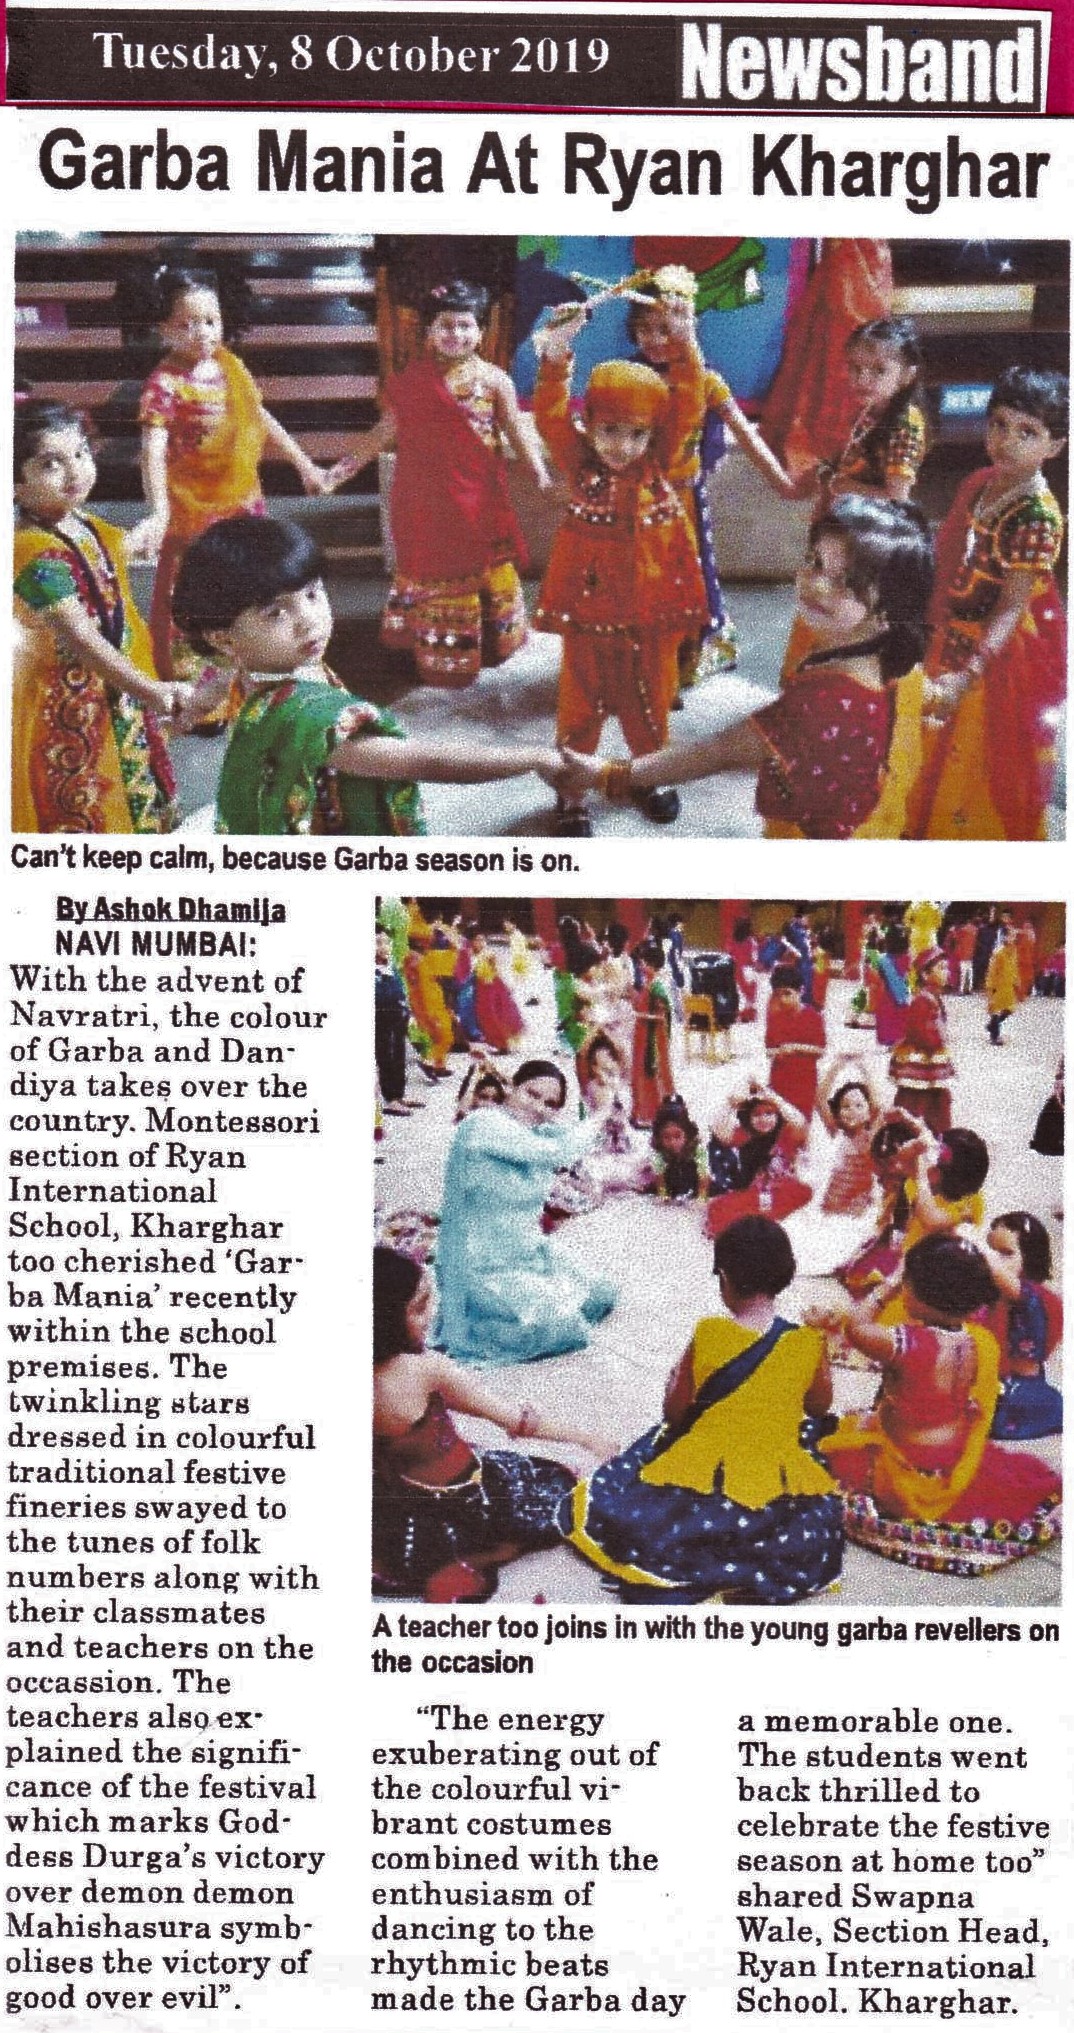 Garba mania at Ryan Kharghar was mentioned in News band - Ryan International School, Kharghar